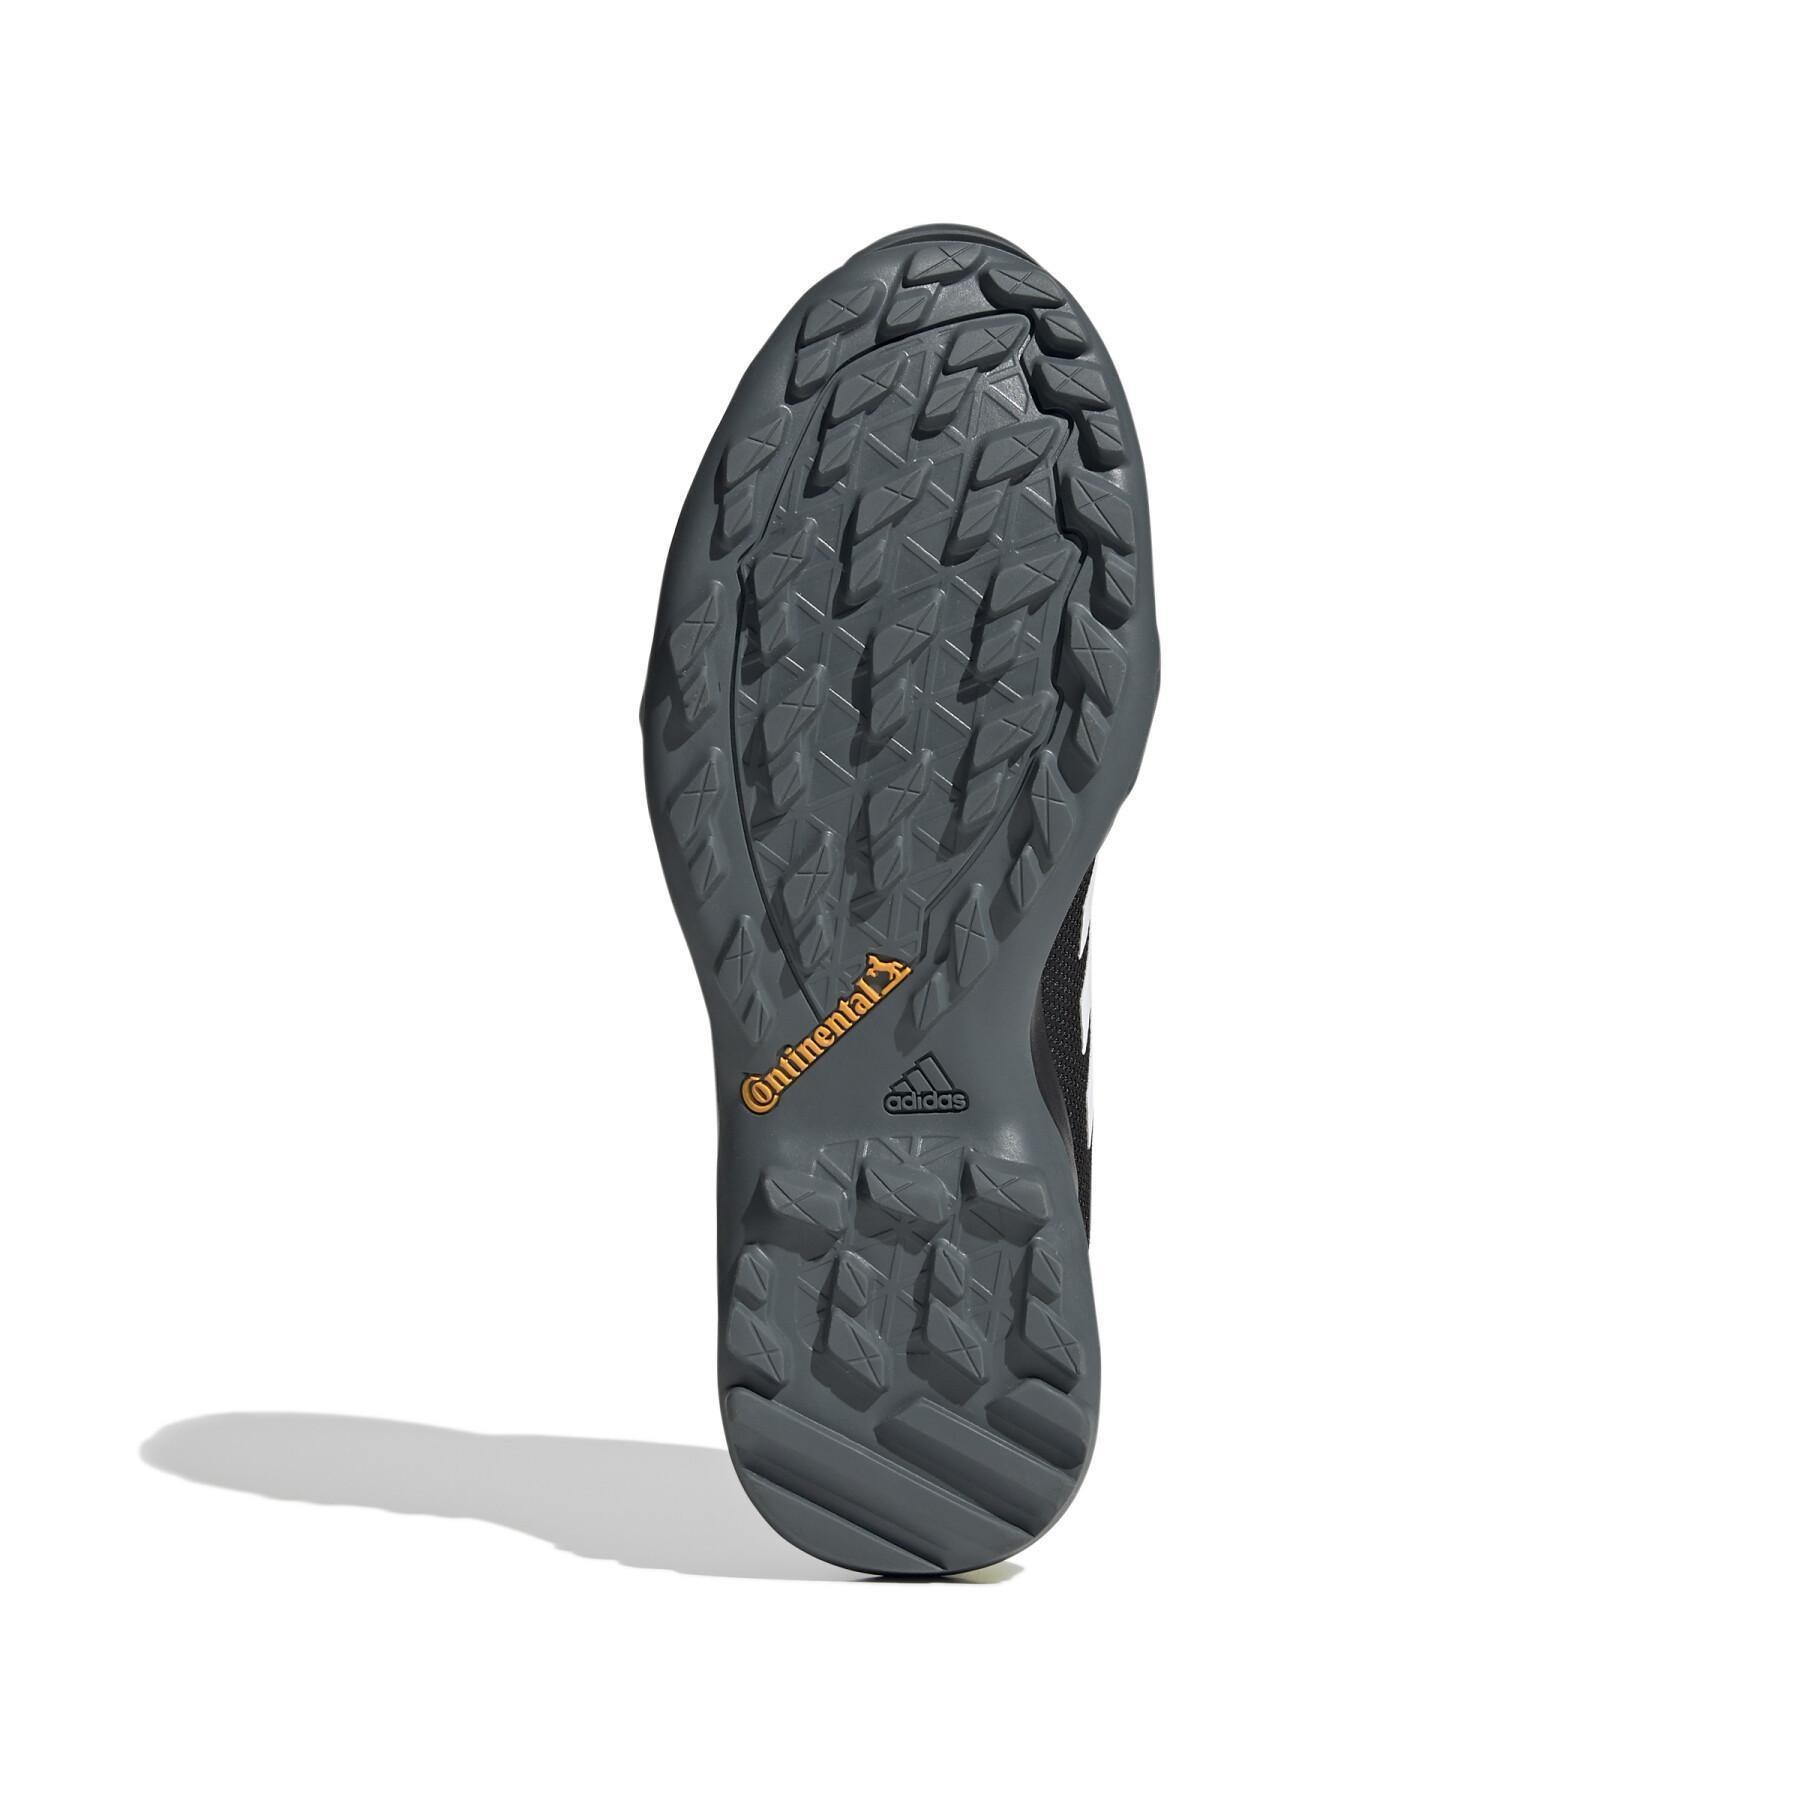 Hiking shoes adidas Terrex Ax3